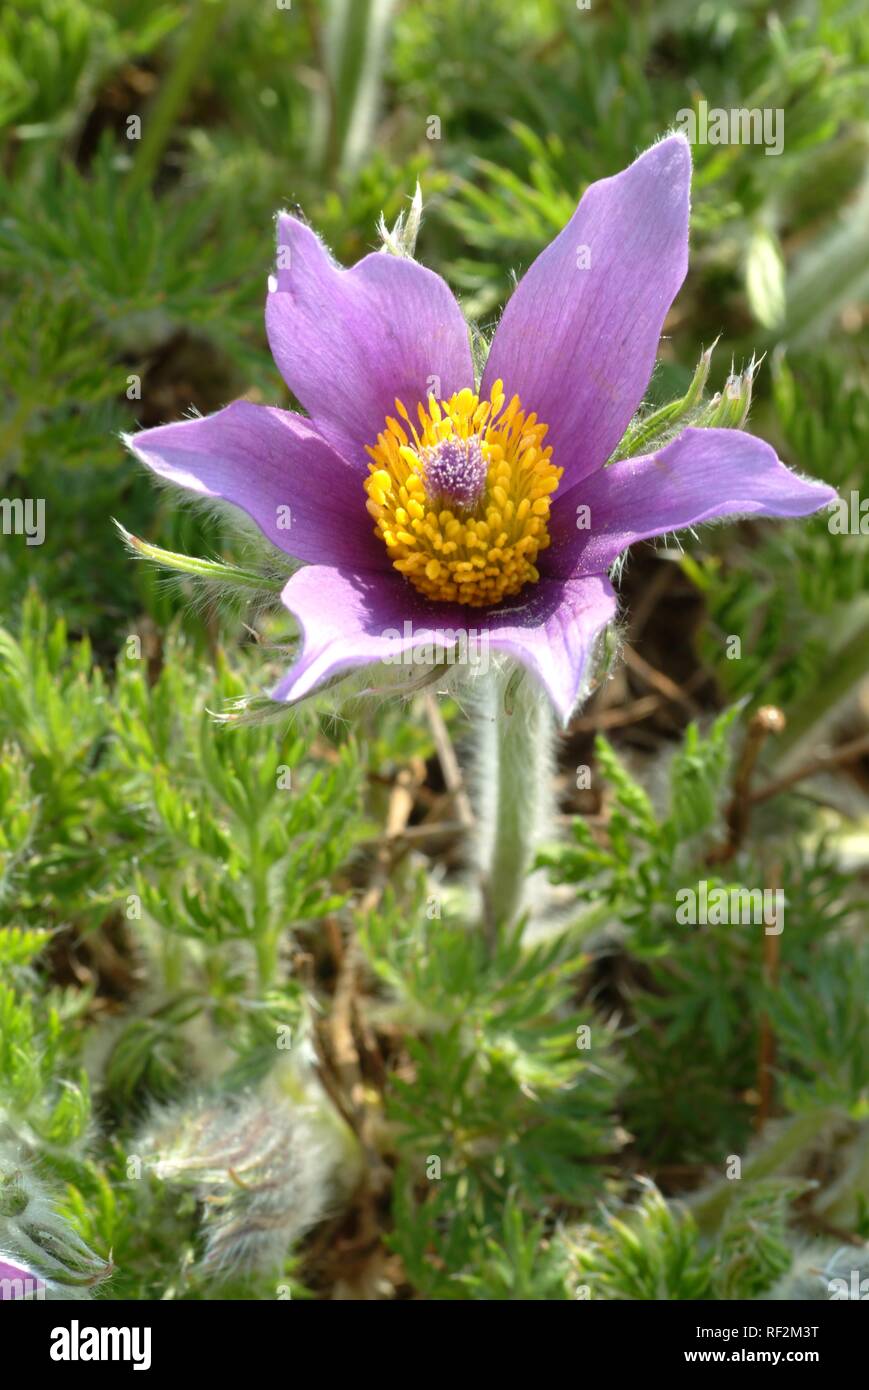 Pasque Flower (Pulsatilla vulgaris, Pulsatilla comune) aka Dane's Blood, medicinal plant Stock Photo